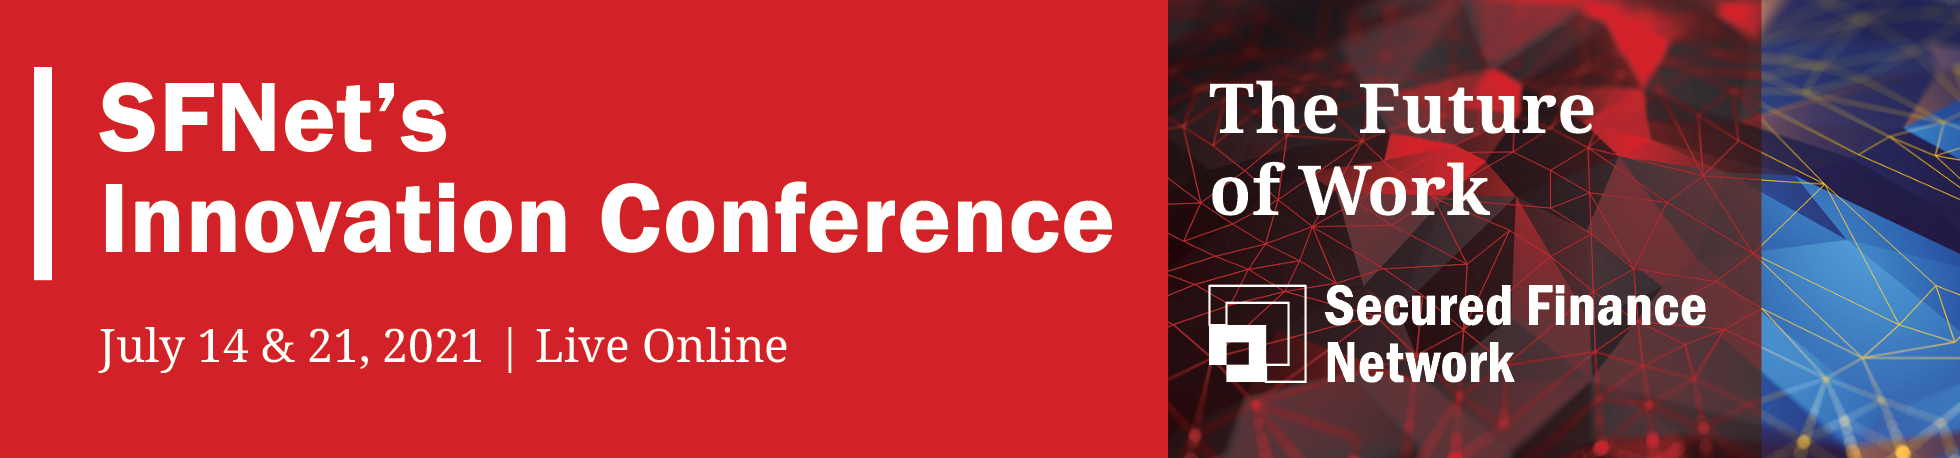 SFNet Innovation Conference 2021 logo